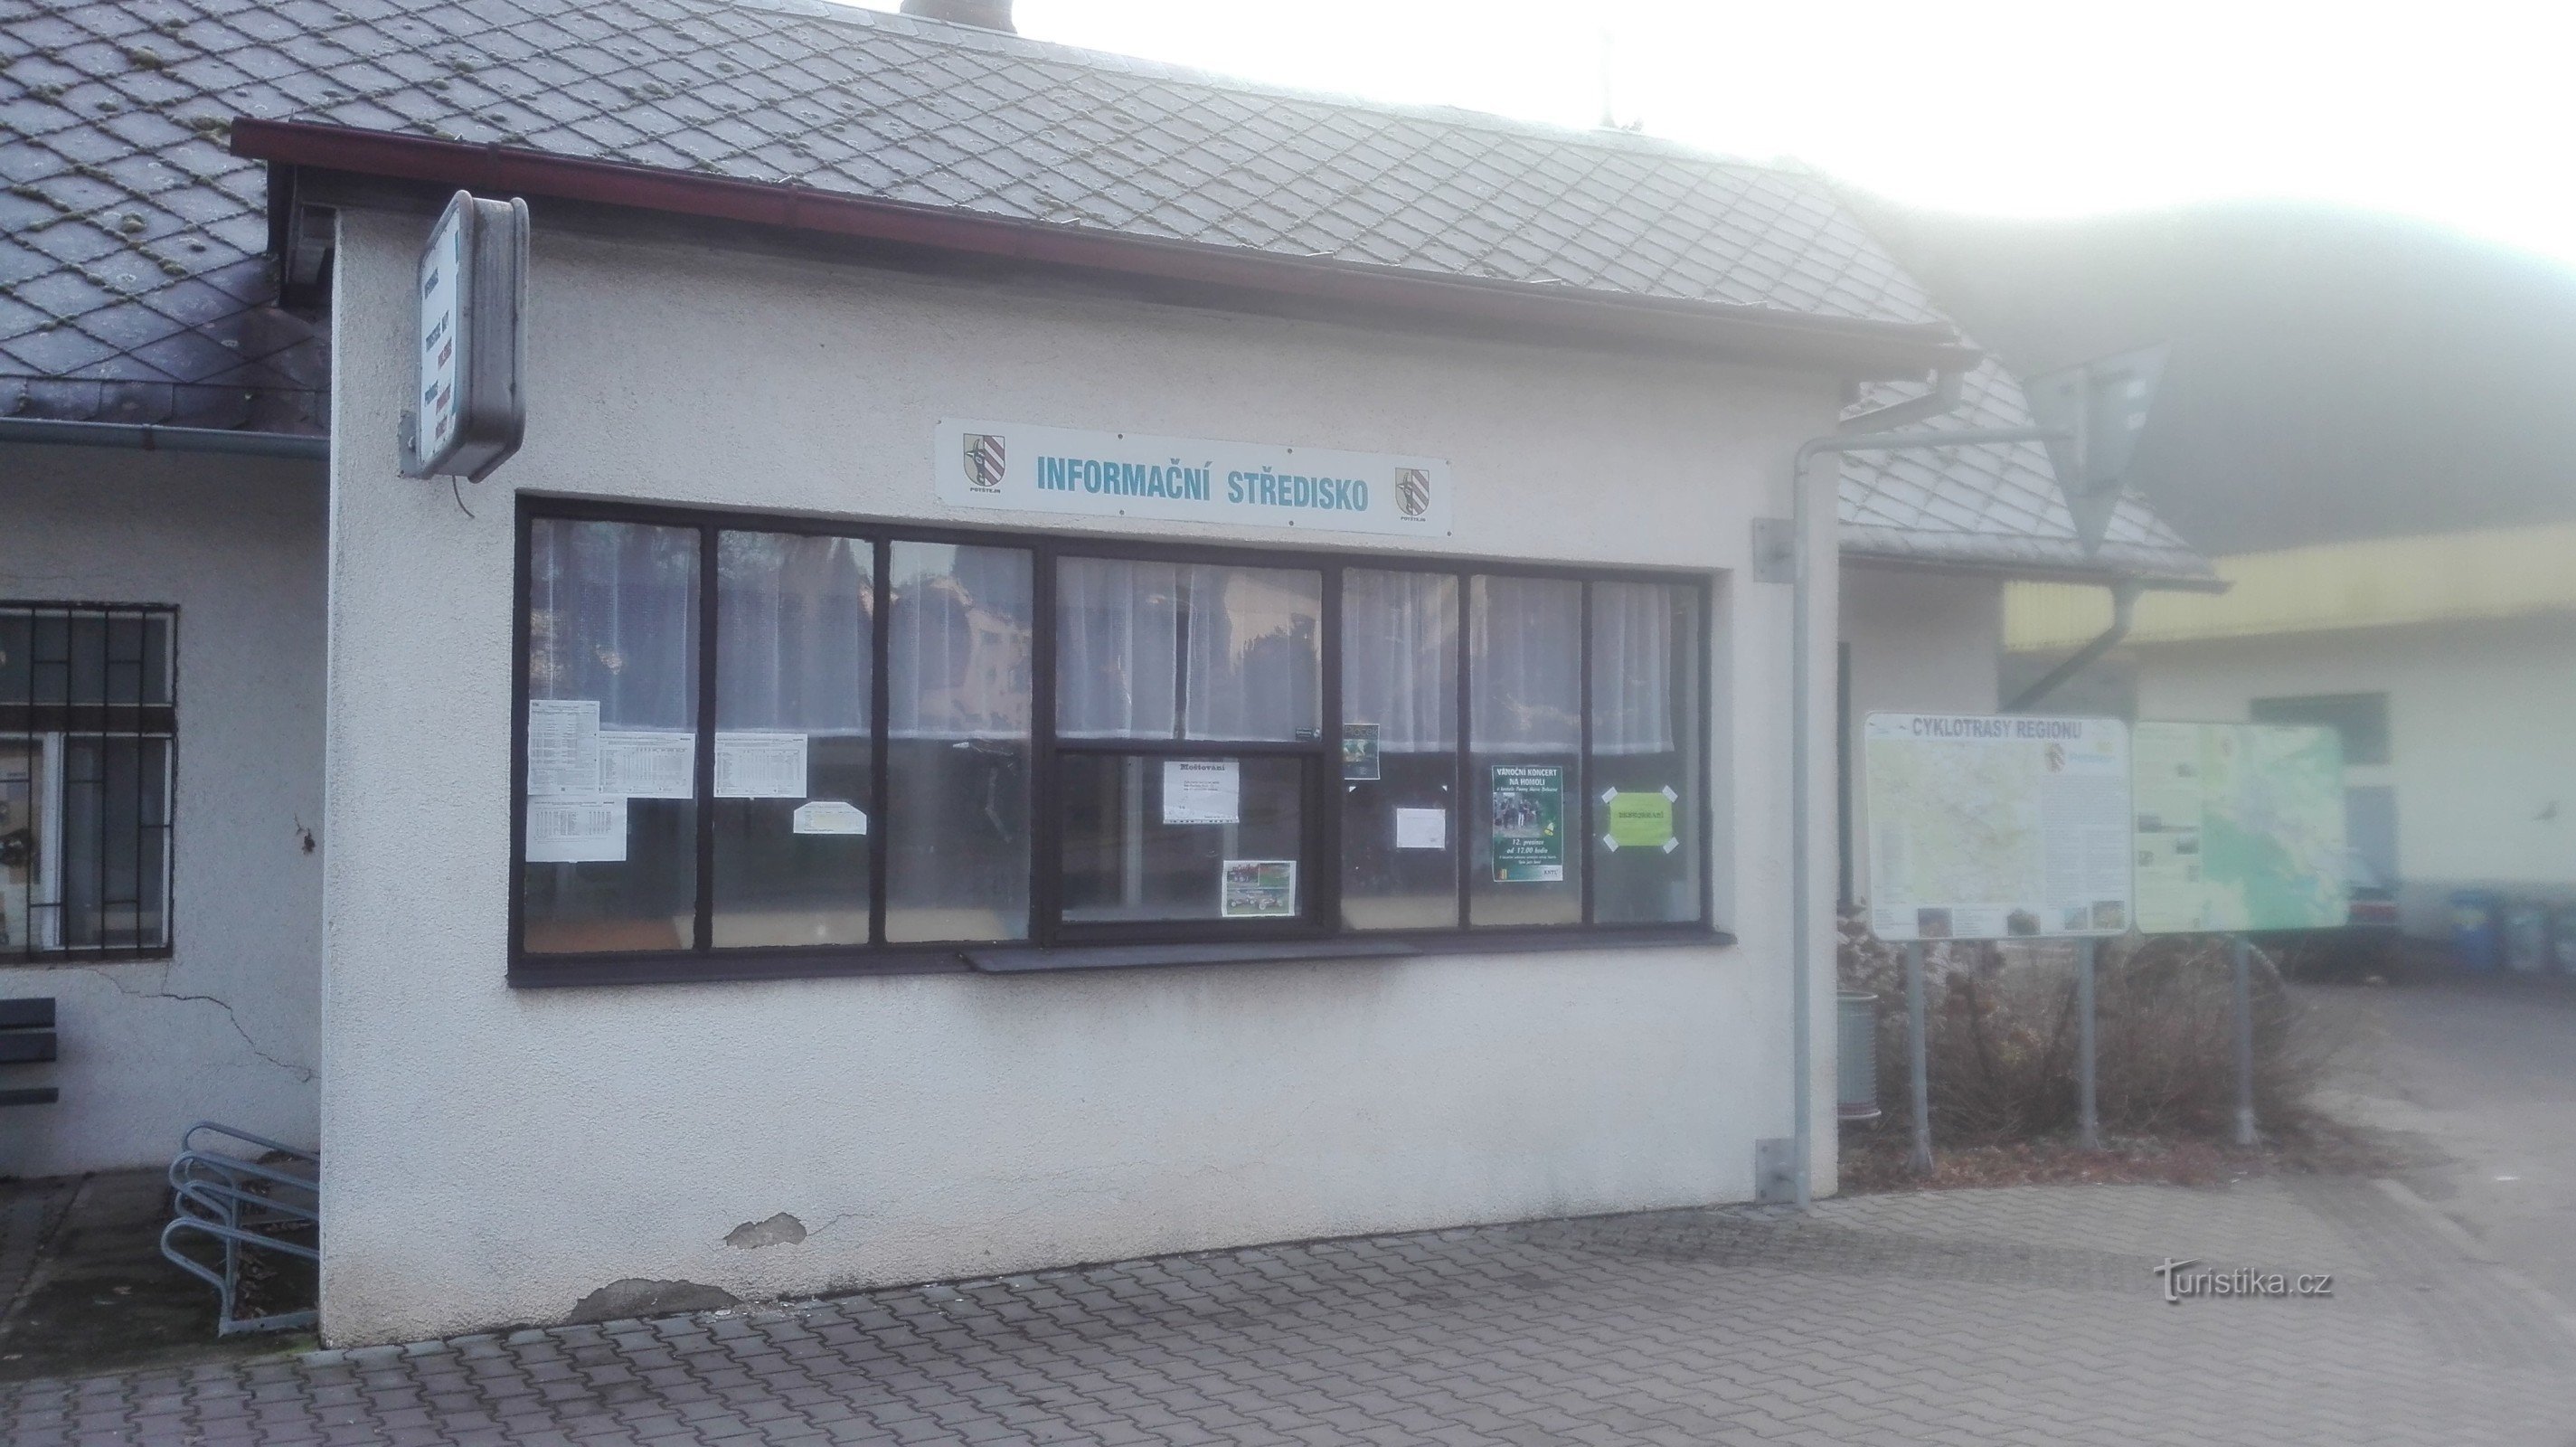 Potštejn - information center